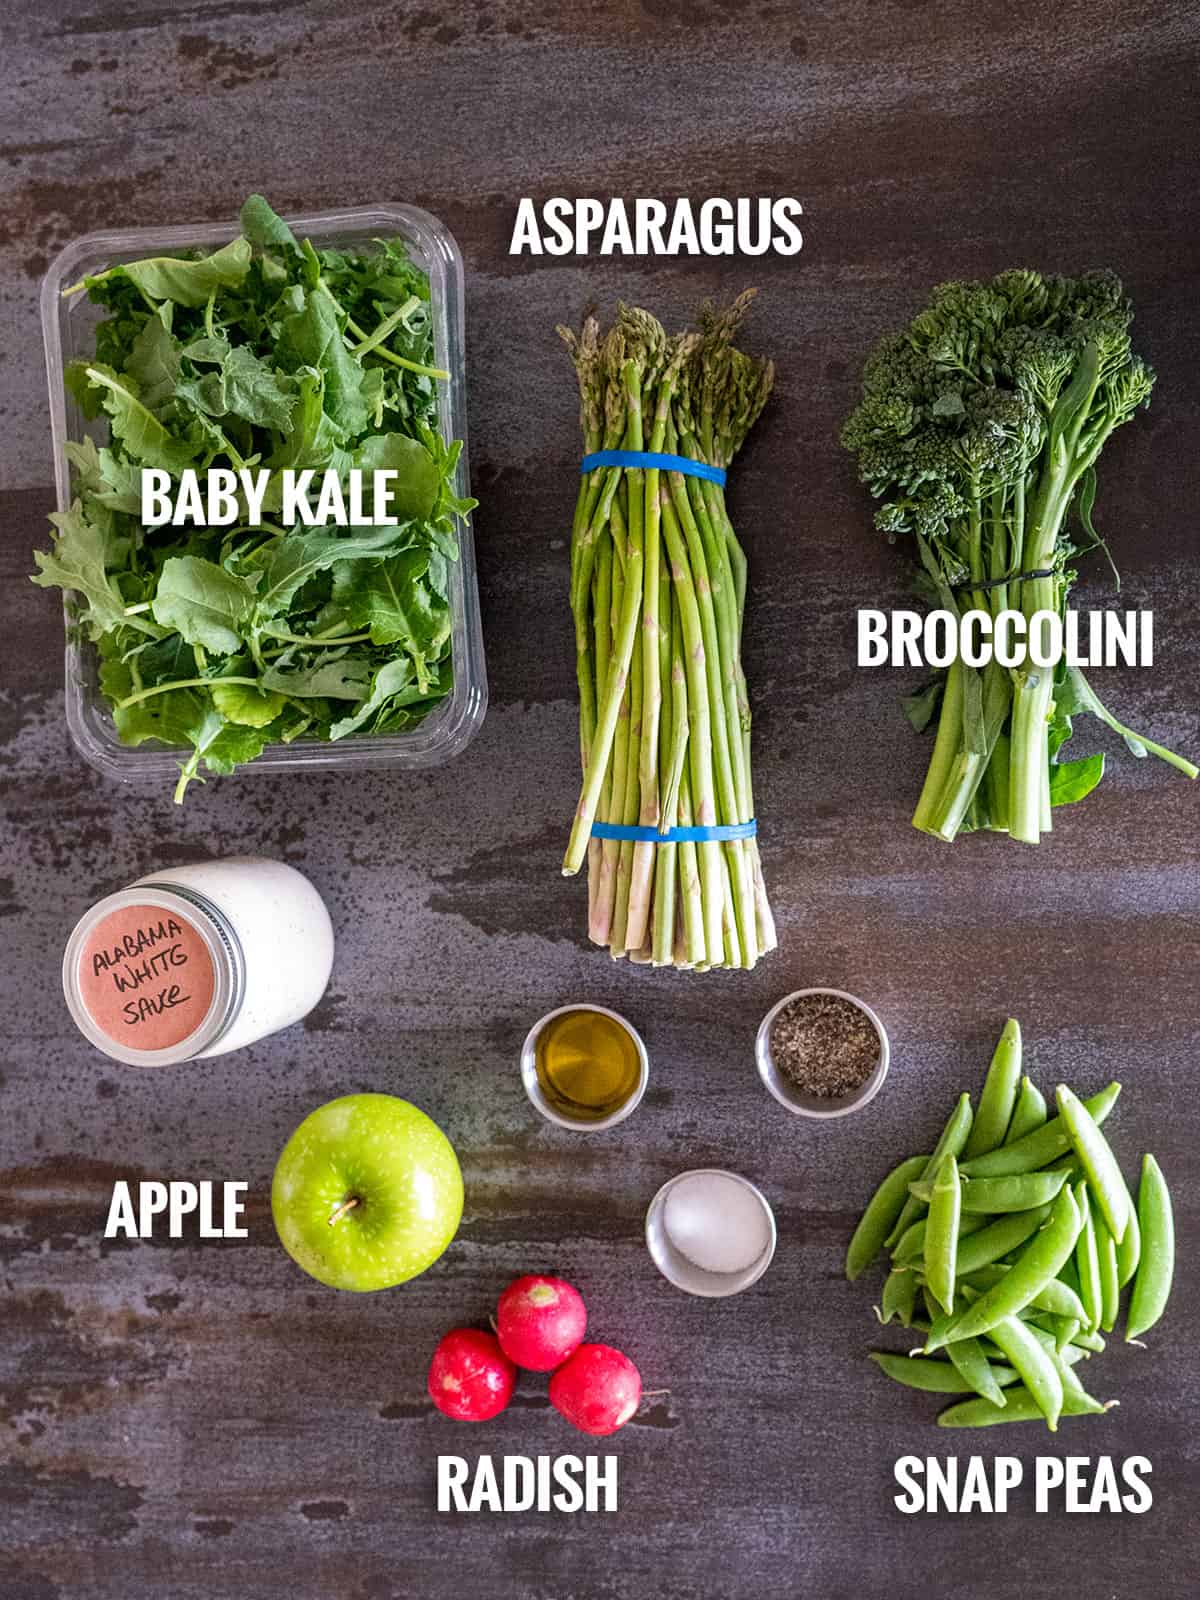 spring salad ingredients: baby kale, asparagus, broccolini, Alabama white sauce, apple, radish, snap peas, salt, pepper, olive oil.